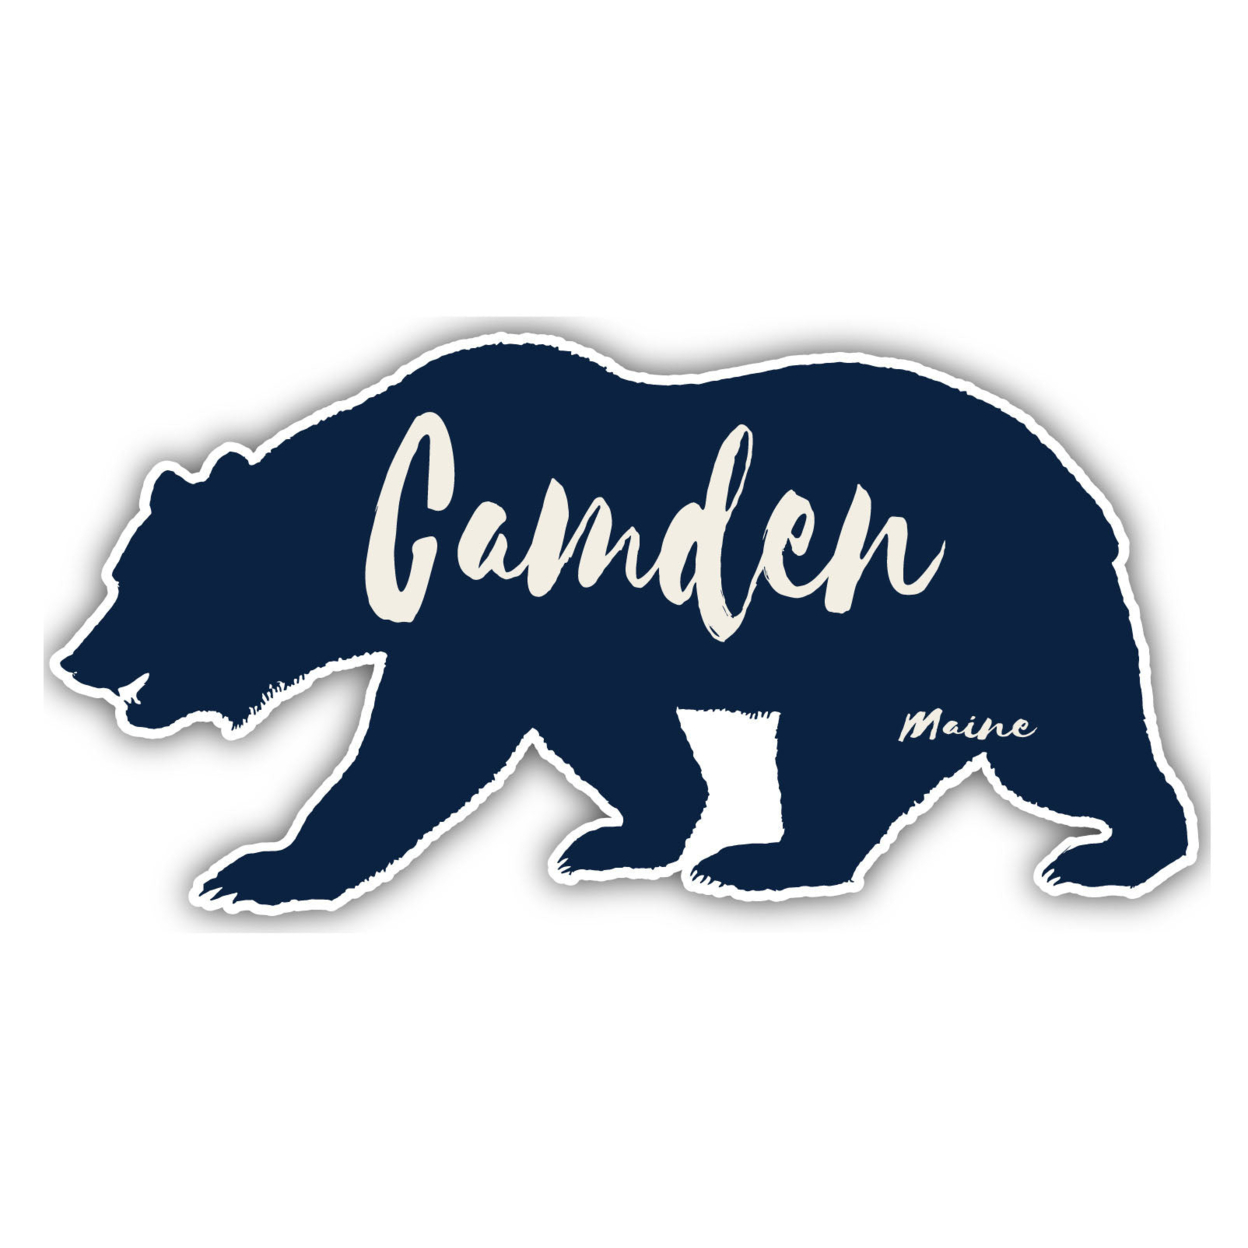 Camden Maine Souvenir Decorative Stickers (Choose Theme And Size) - Single Unit, 8-Inch, Tent